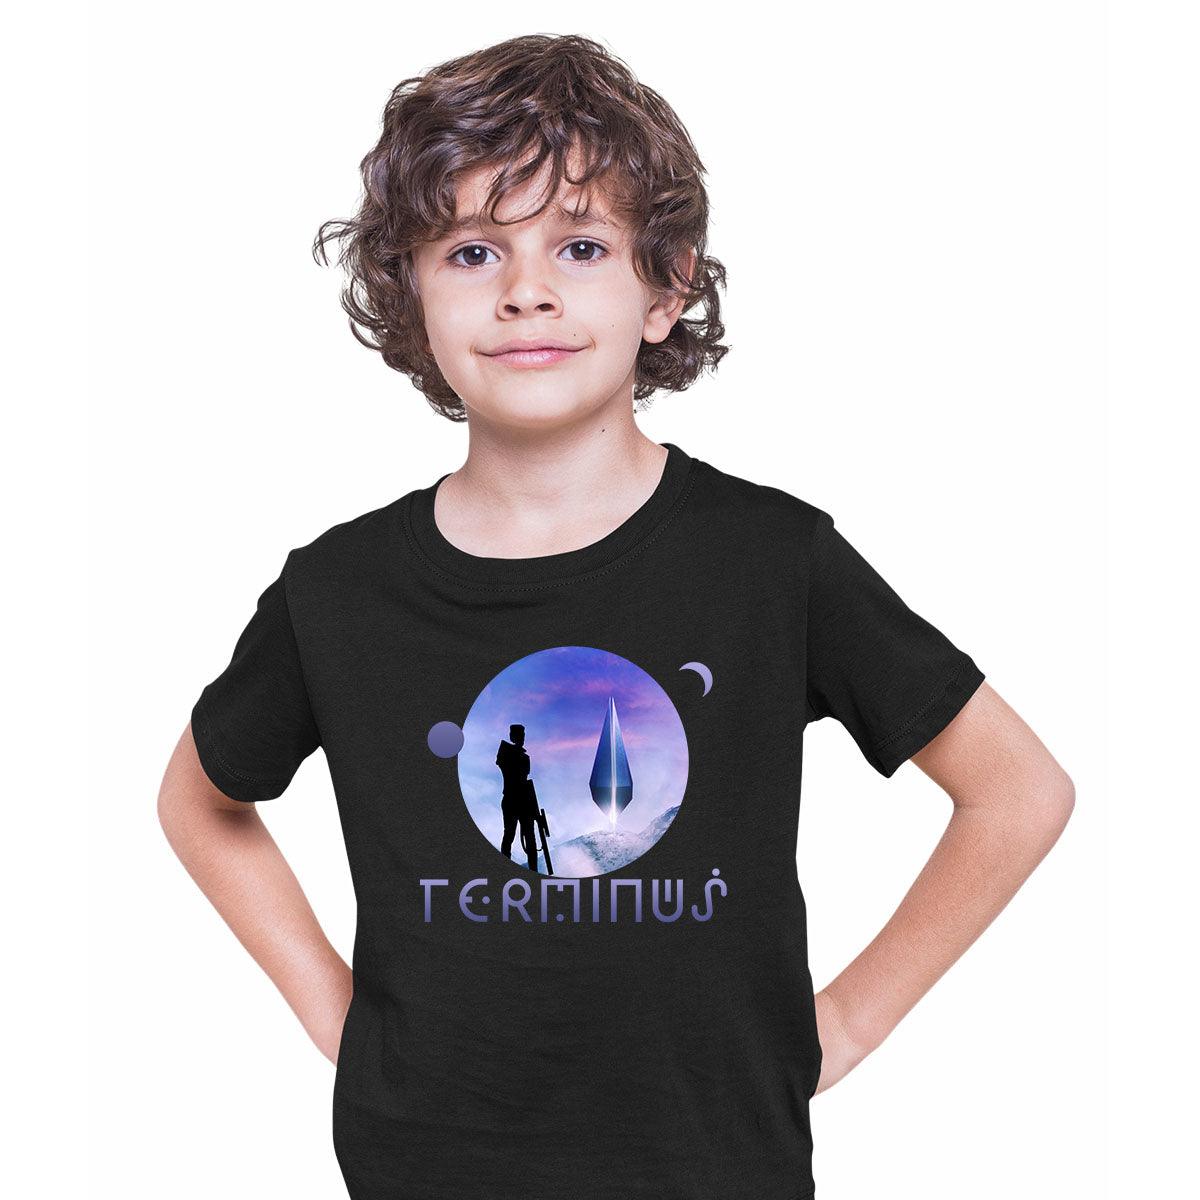 Foundation Terminus New Apple Sci-fi TV post-apocalyptic Hari Seldon T-shirt for Kids - Kuzi Tees